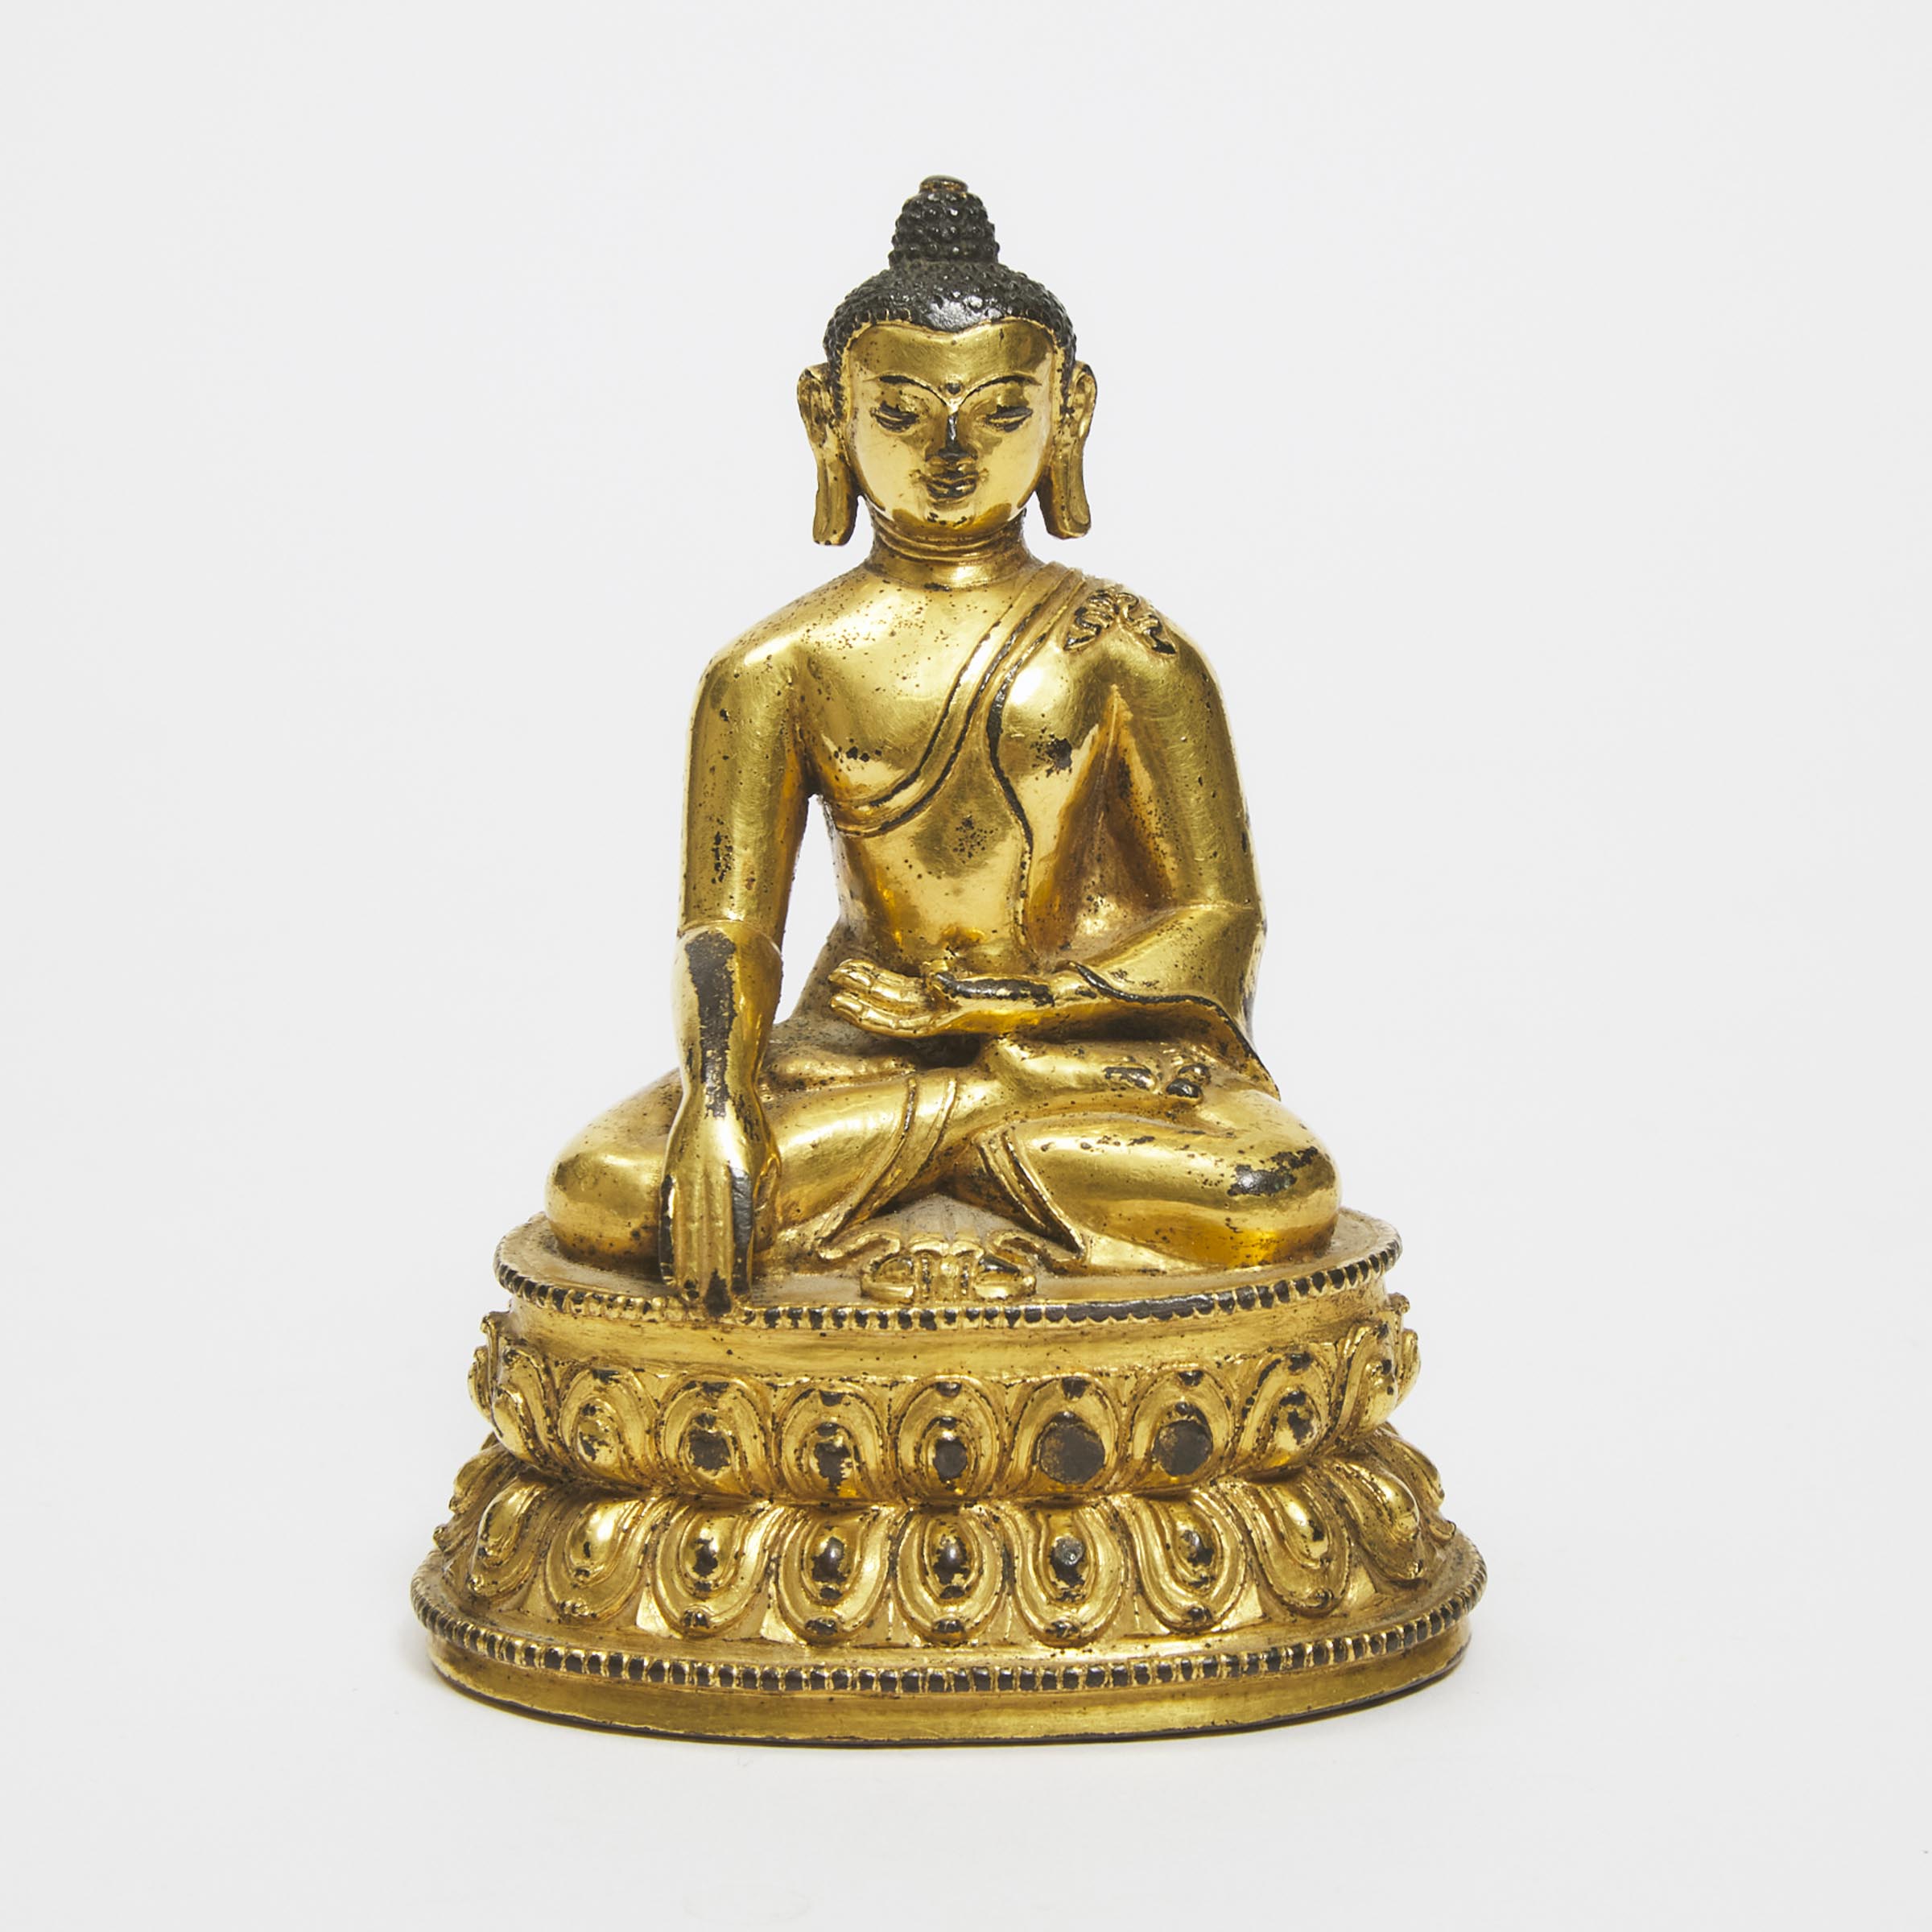 A Gilt Copper Alloy Figure of Seated Shakyamuni Buddha, Tibet, 15th Century